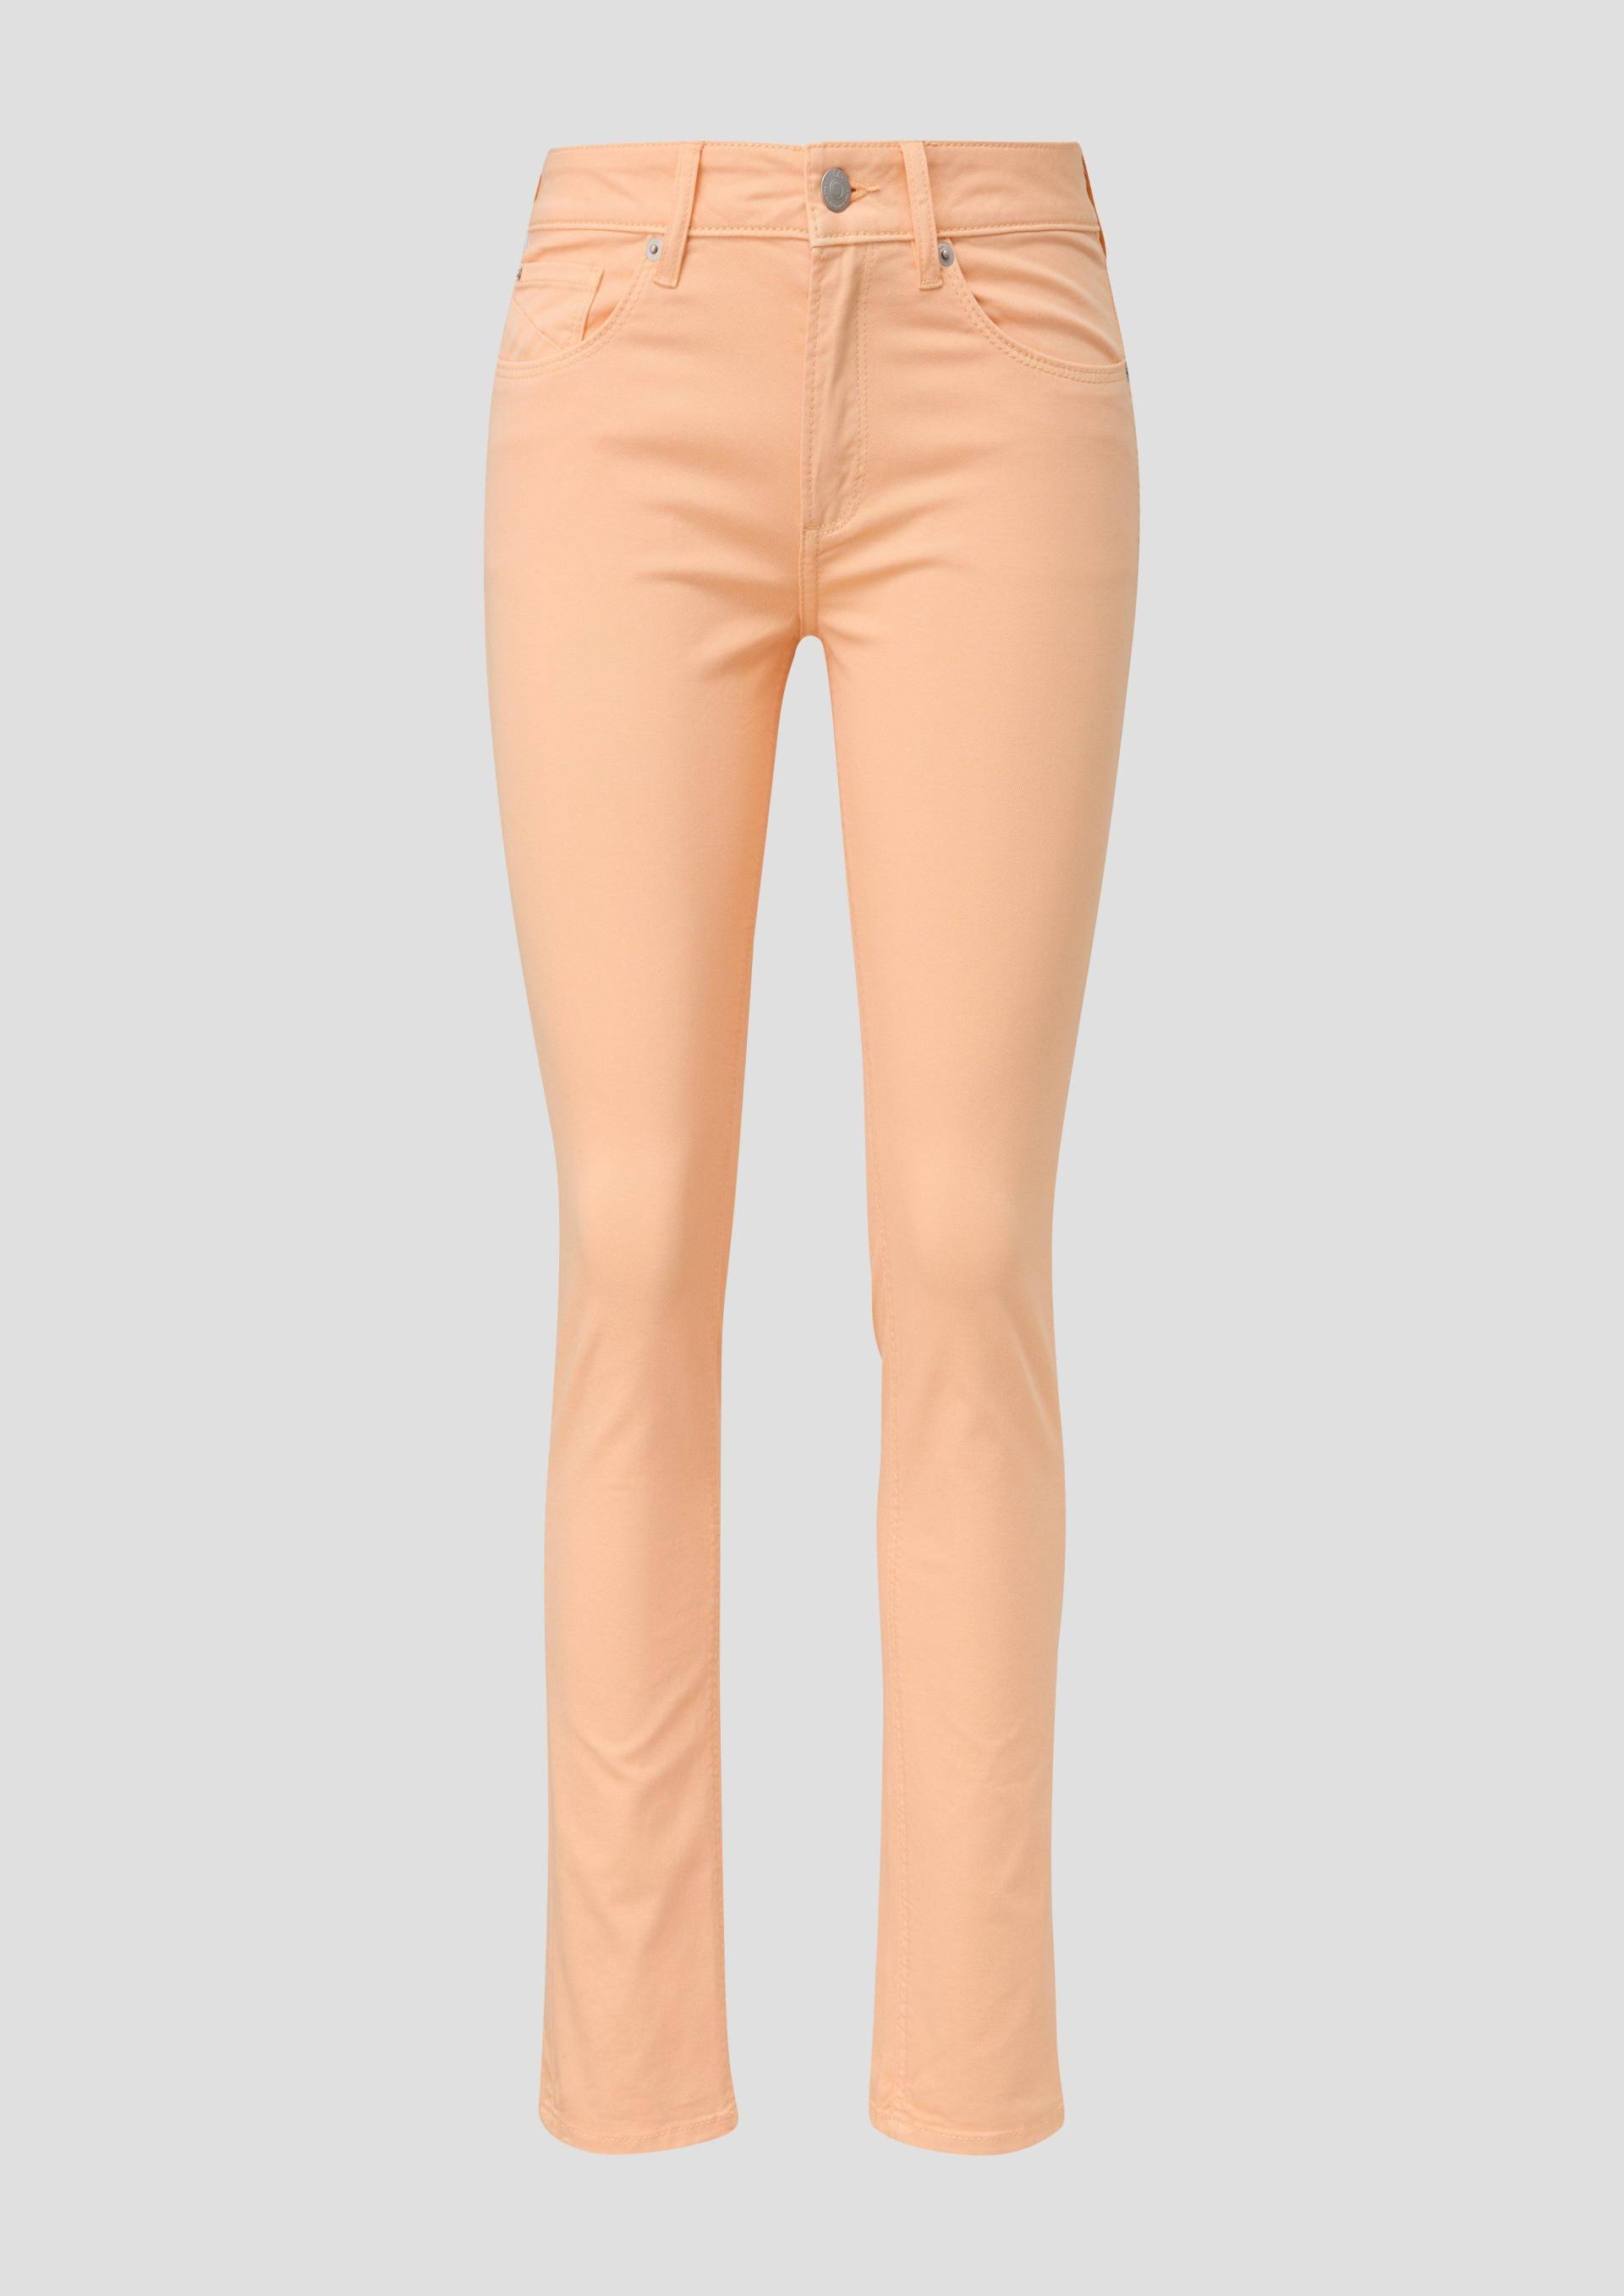 QS - Jeans / Regular Fit / Mid Rise / Slim Fit, Damen, Orange von QS